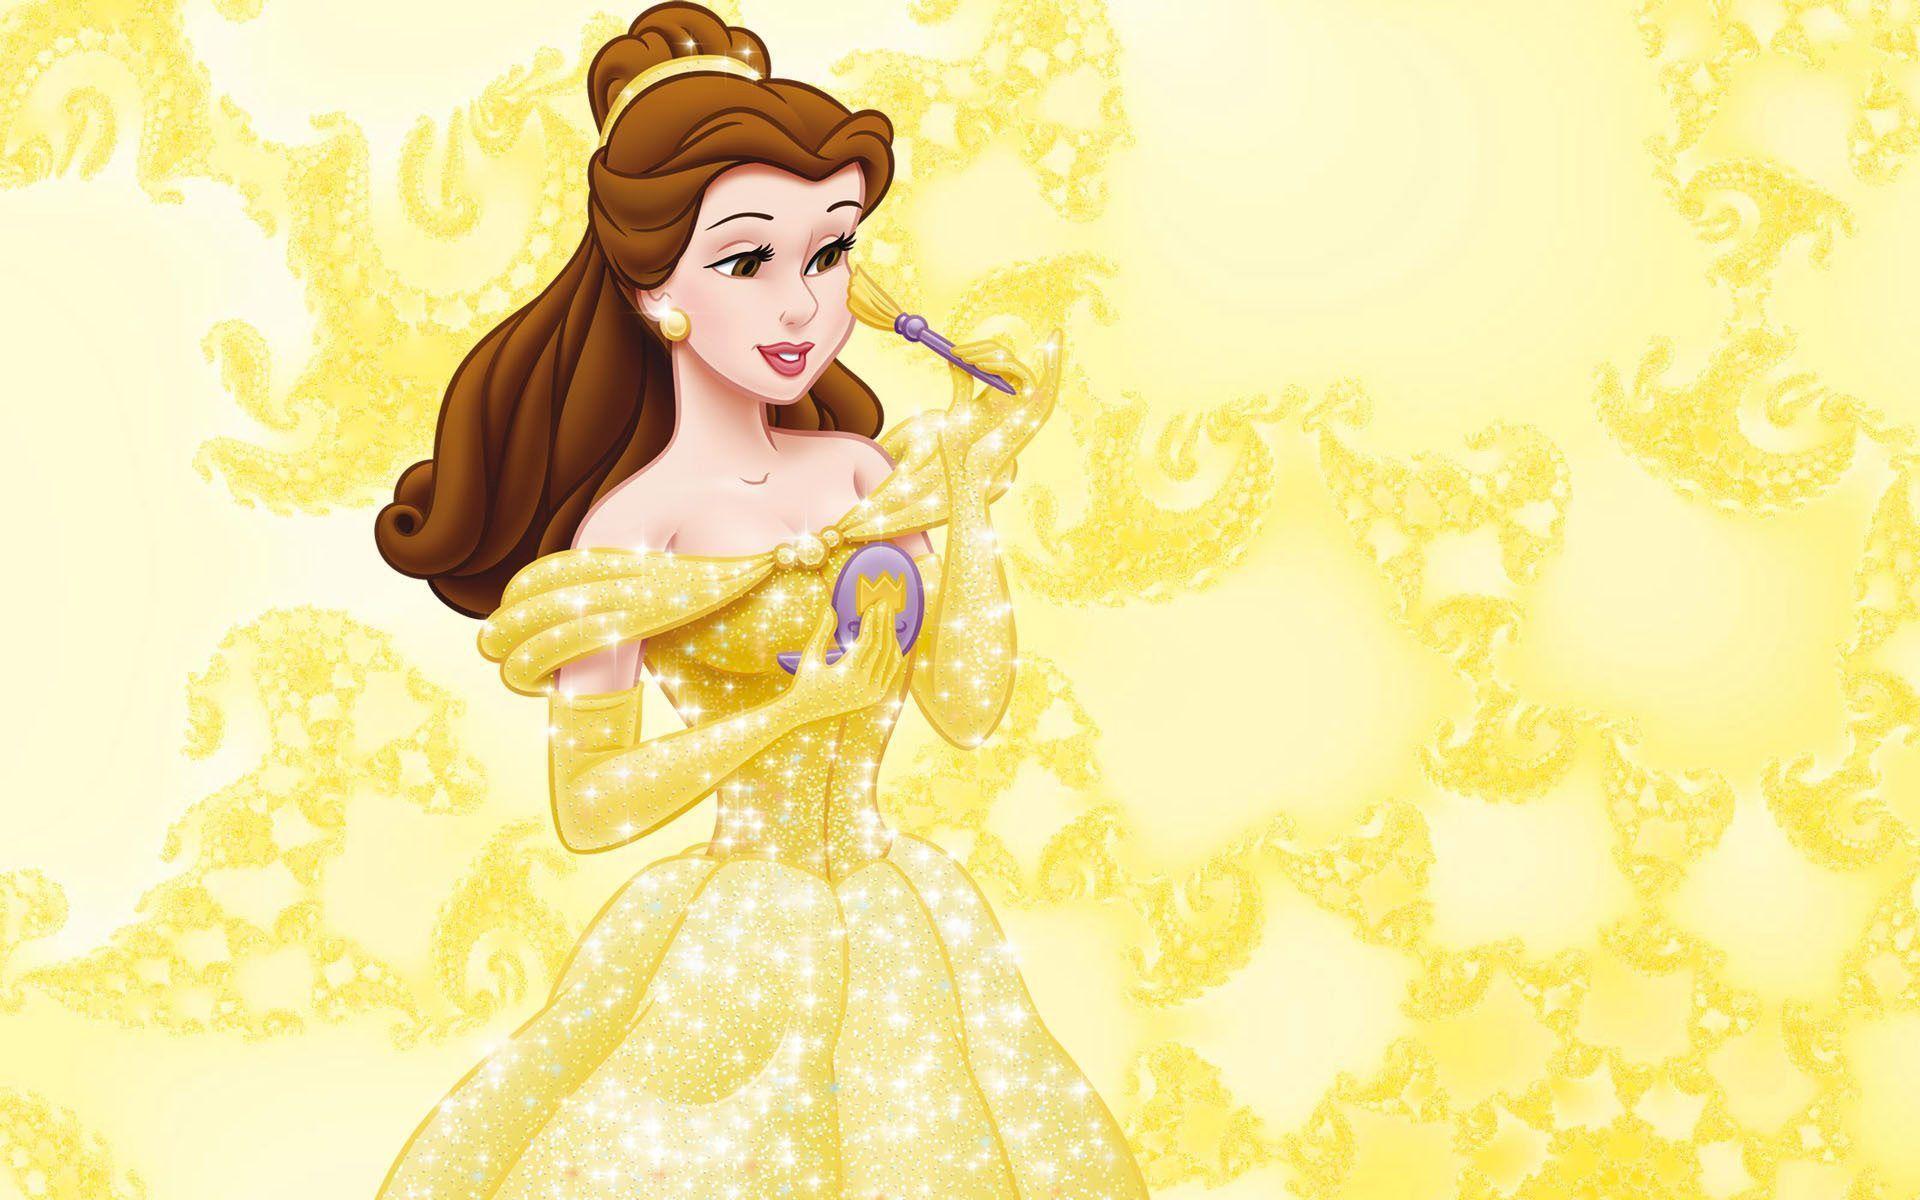 Disney Bella Wallpapers - Top Free Disney Bella Backgrounds ...